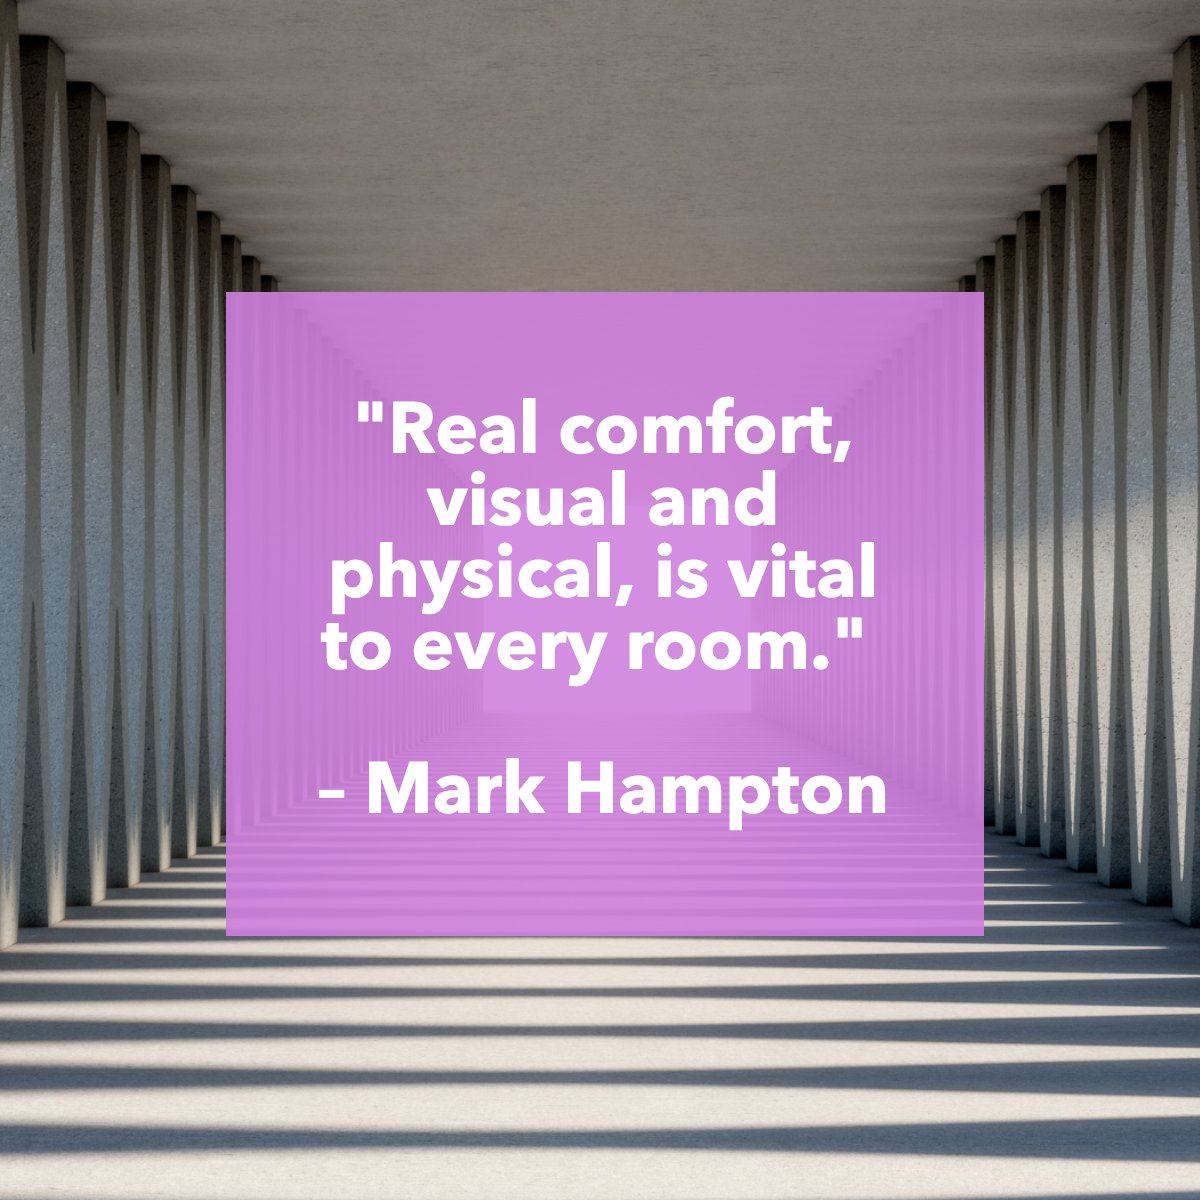 'Real comfort, visual and physical, is vital to every room.'
― Mark Hampton 📖

#quote #quoteoftheday #comfort #design #interiordesign #architecture 
 #swfl #oleglisitsyn #oleglis #sarasota #Florida #wearemvp #sarasotarealtor #waterfronthomes #luxuryhomes